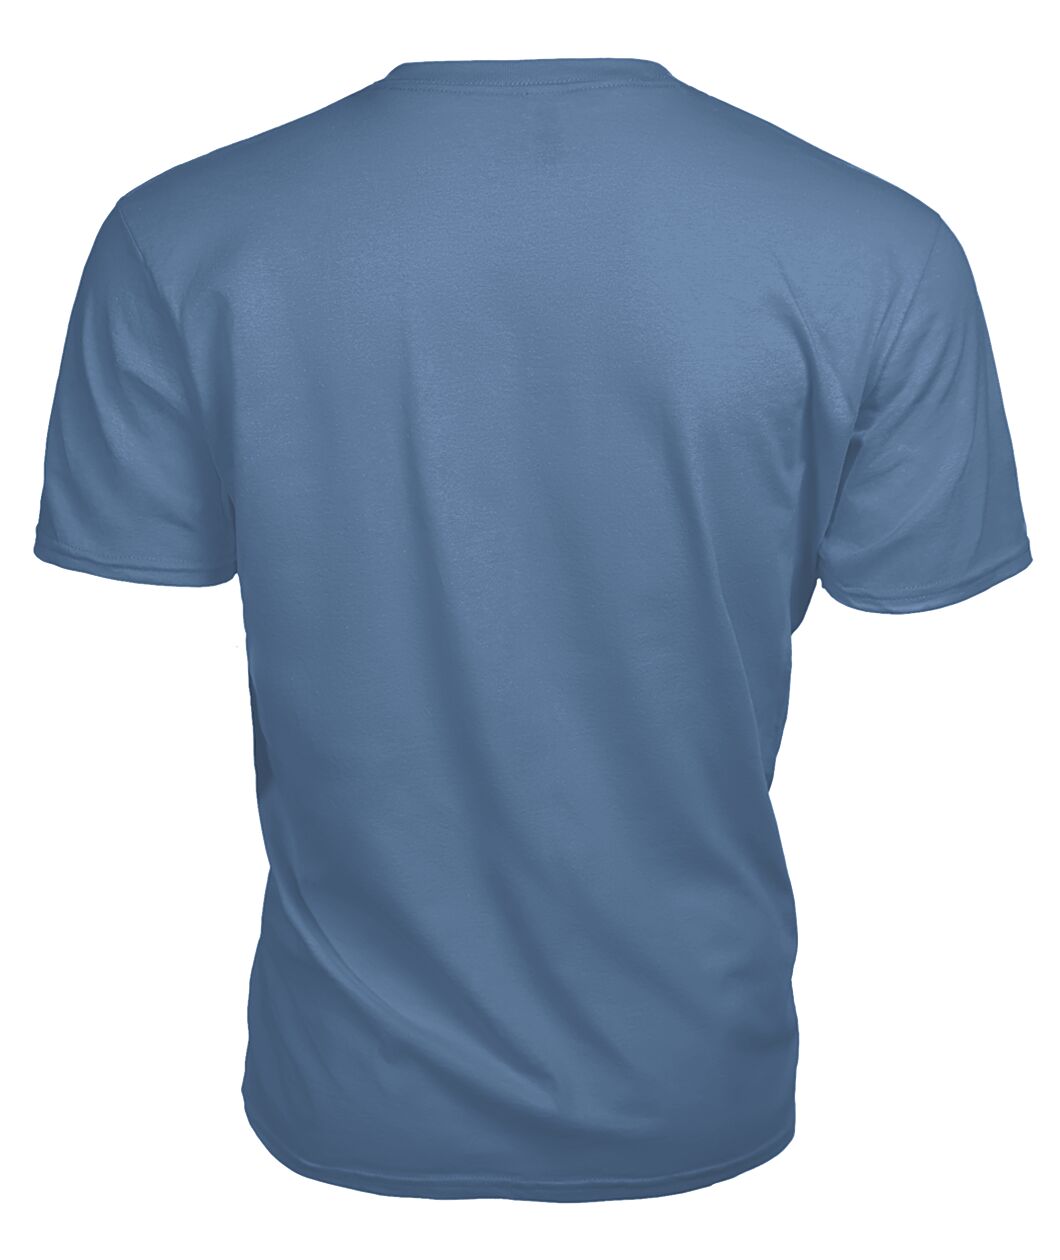 Thomson Family Tartan 2D T-Shirt